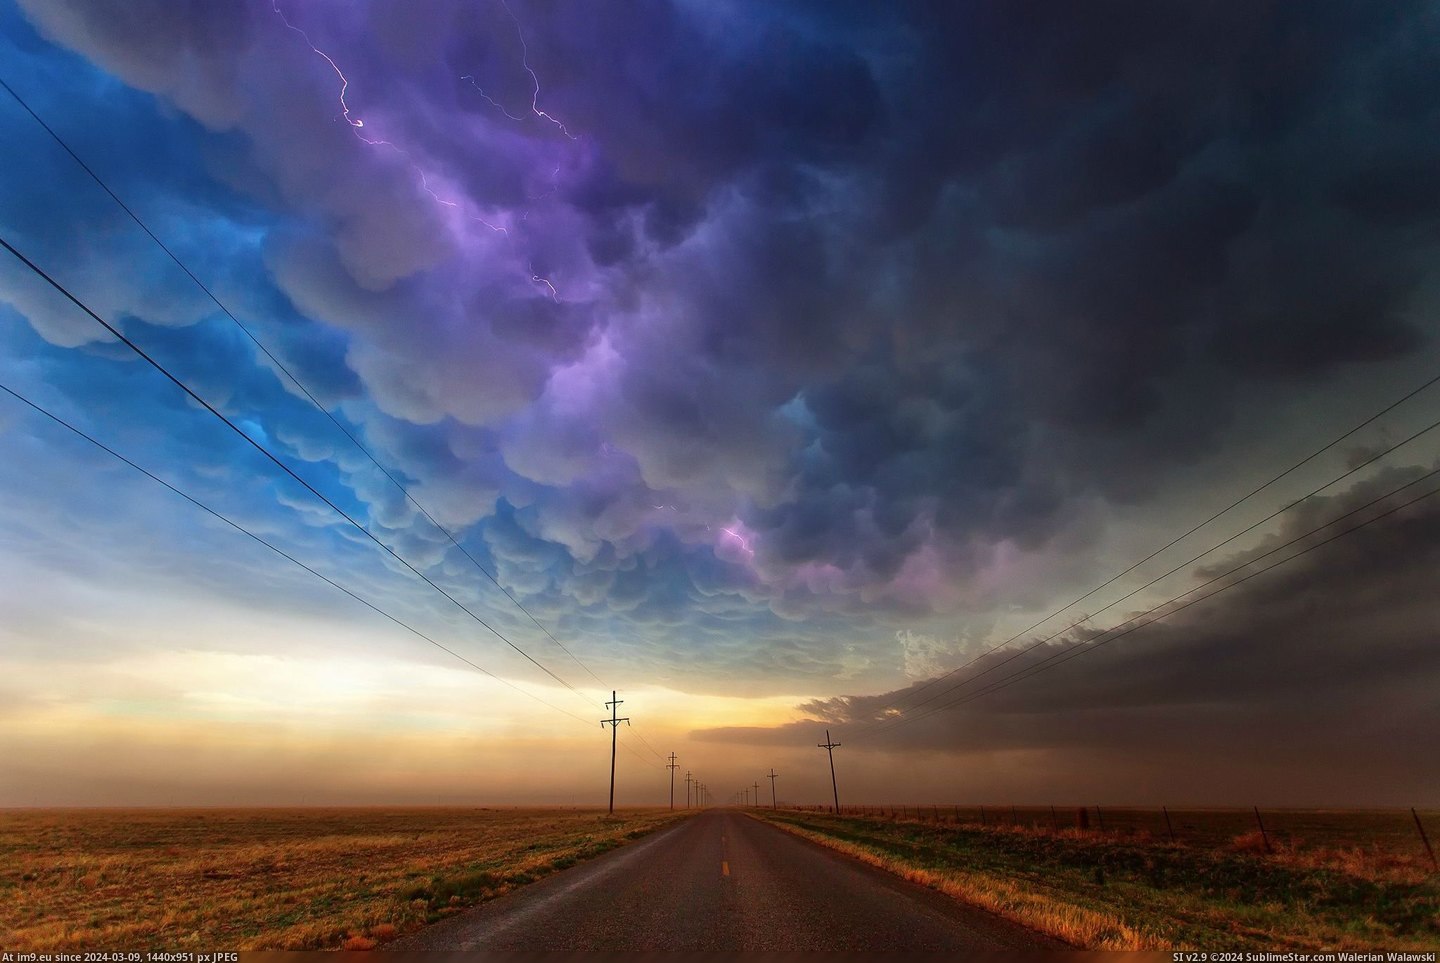 #Texas #Storm #Stunning [Pics] Stunning Storm Over Texas Pic. (Bild von album My r/PICS favs))